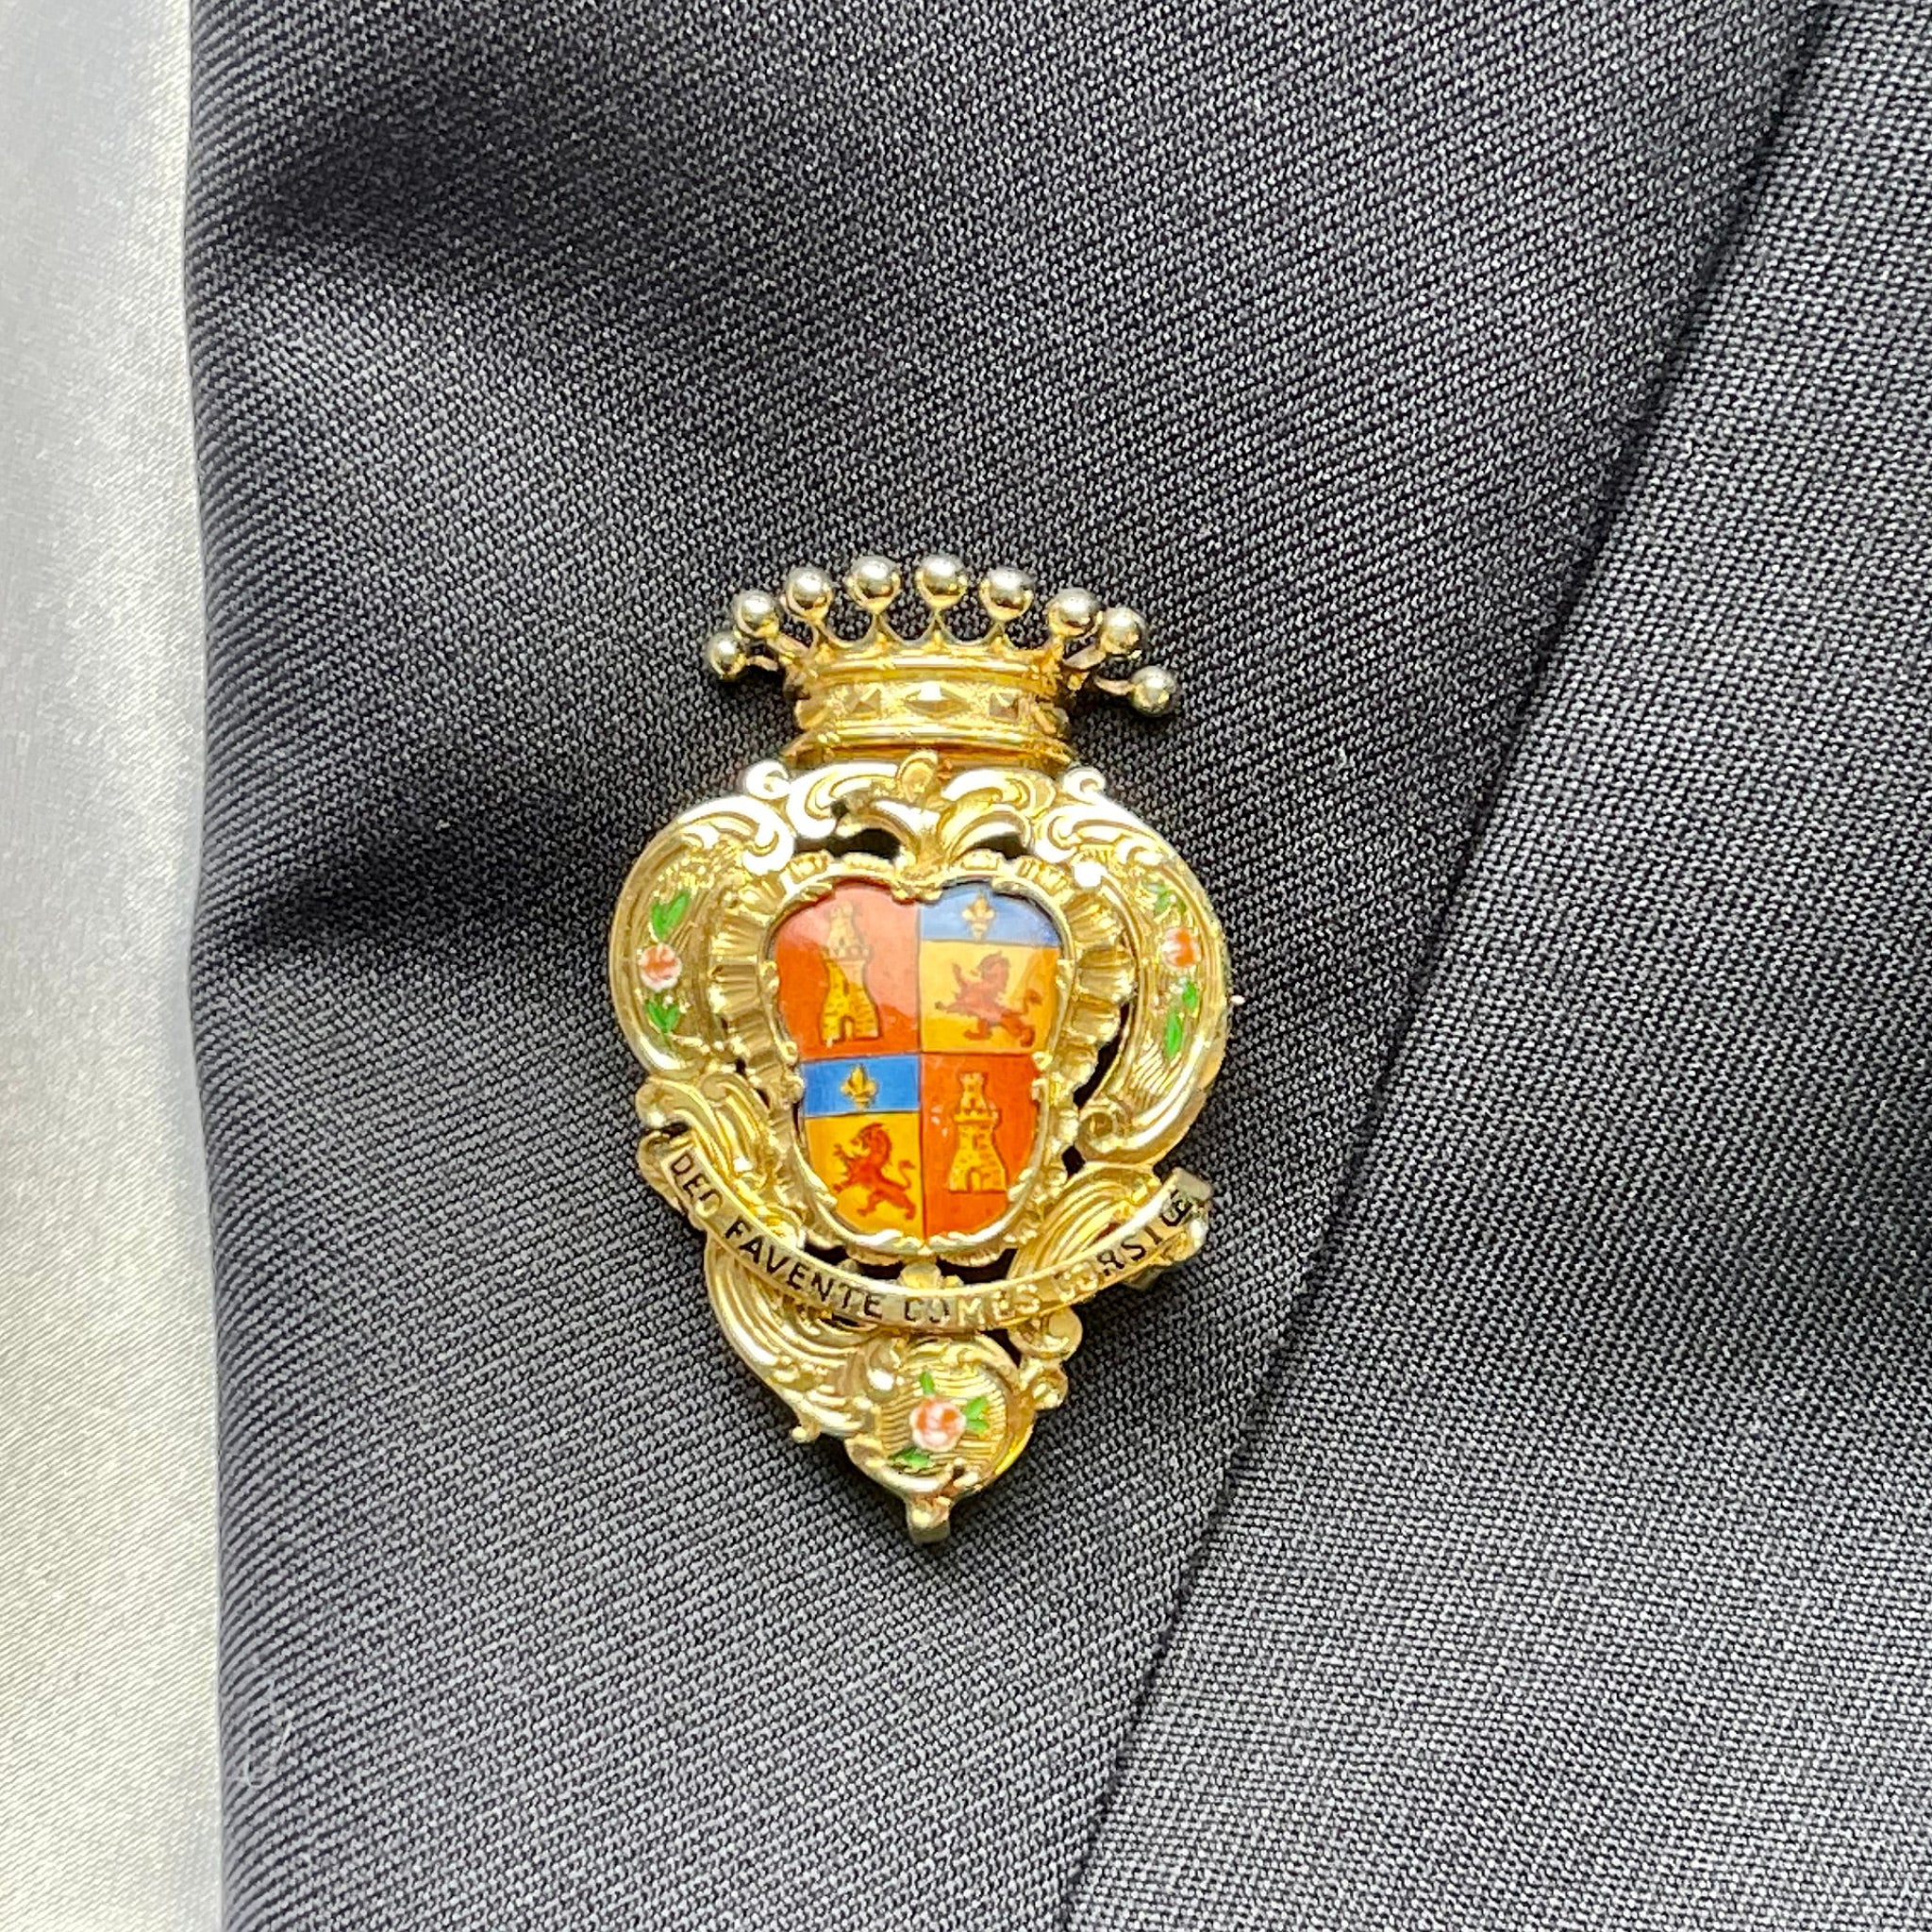 Vintage Heraldic Crest Brooch in 14k Gold and Enamel